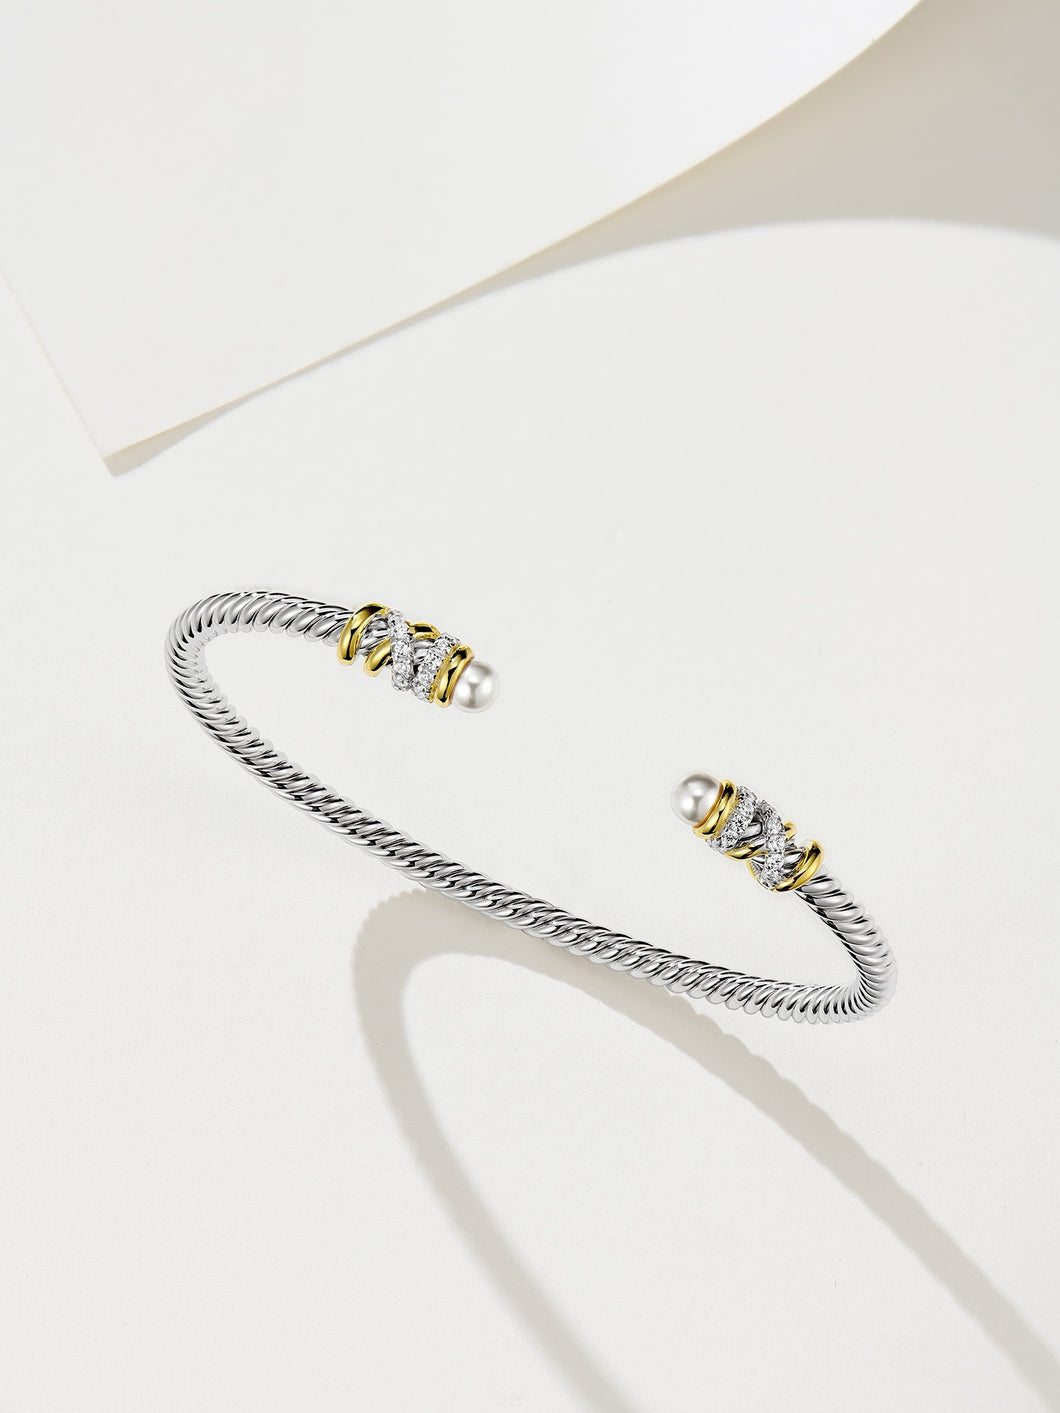 Elegant Silver Bracelet with Gold Plating, Swarovski Pearls, and Zirconia